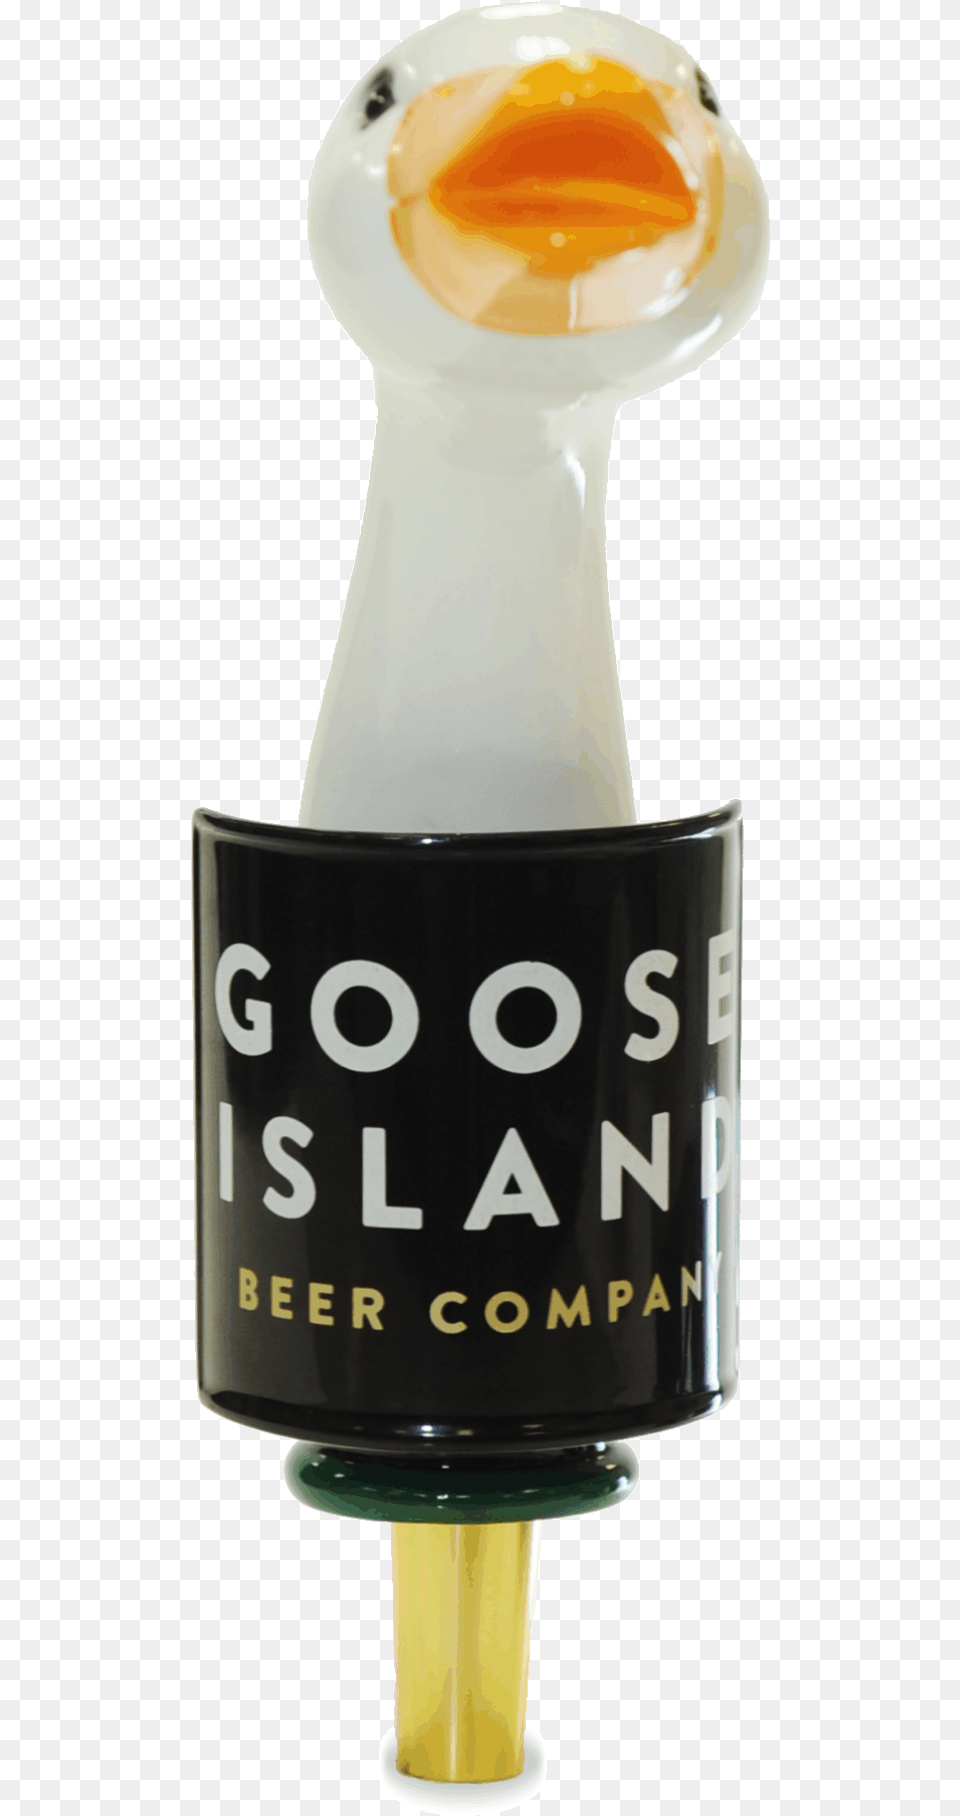 Goose Island Beer Tap Png Image